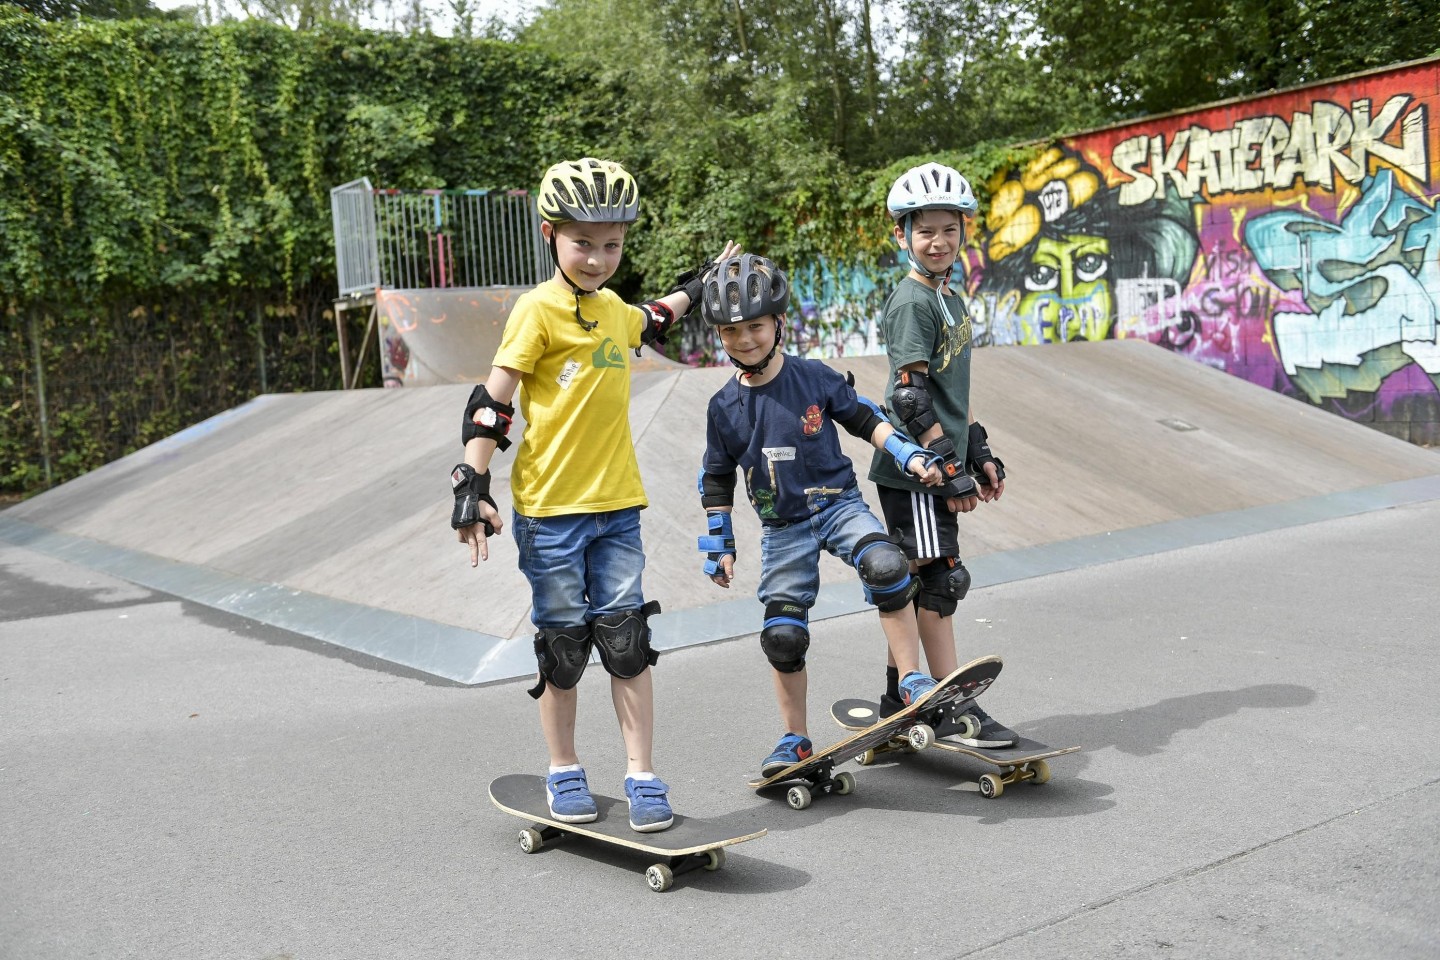 Ferienprogramm: Skateboard fahren lernen